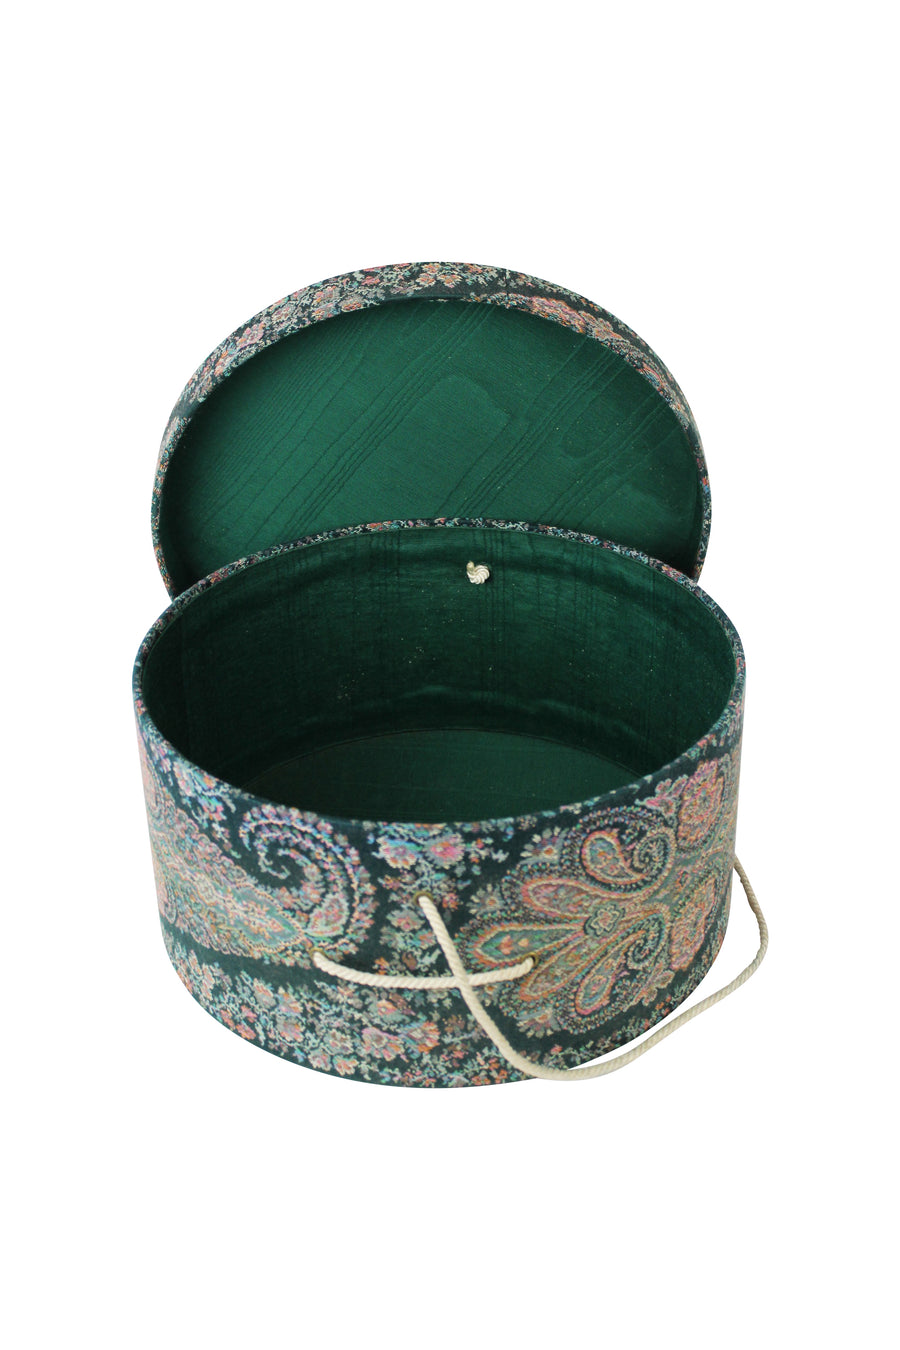 Upholstered Hat Box